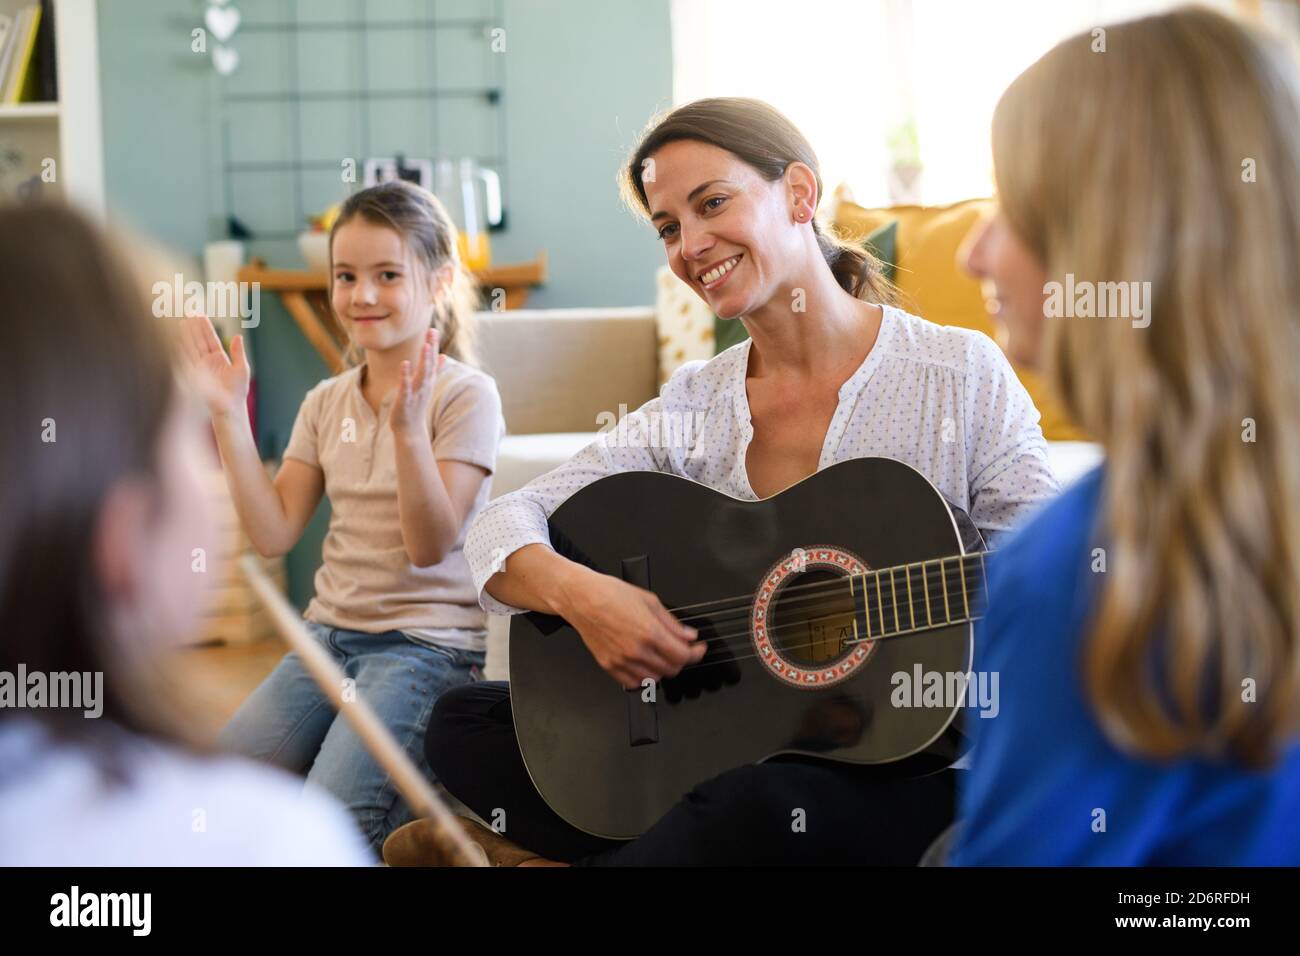 Group of homeschooling children with teacher having music lesson indoors, coronavirus concept. Stock Photo